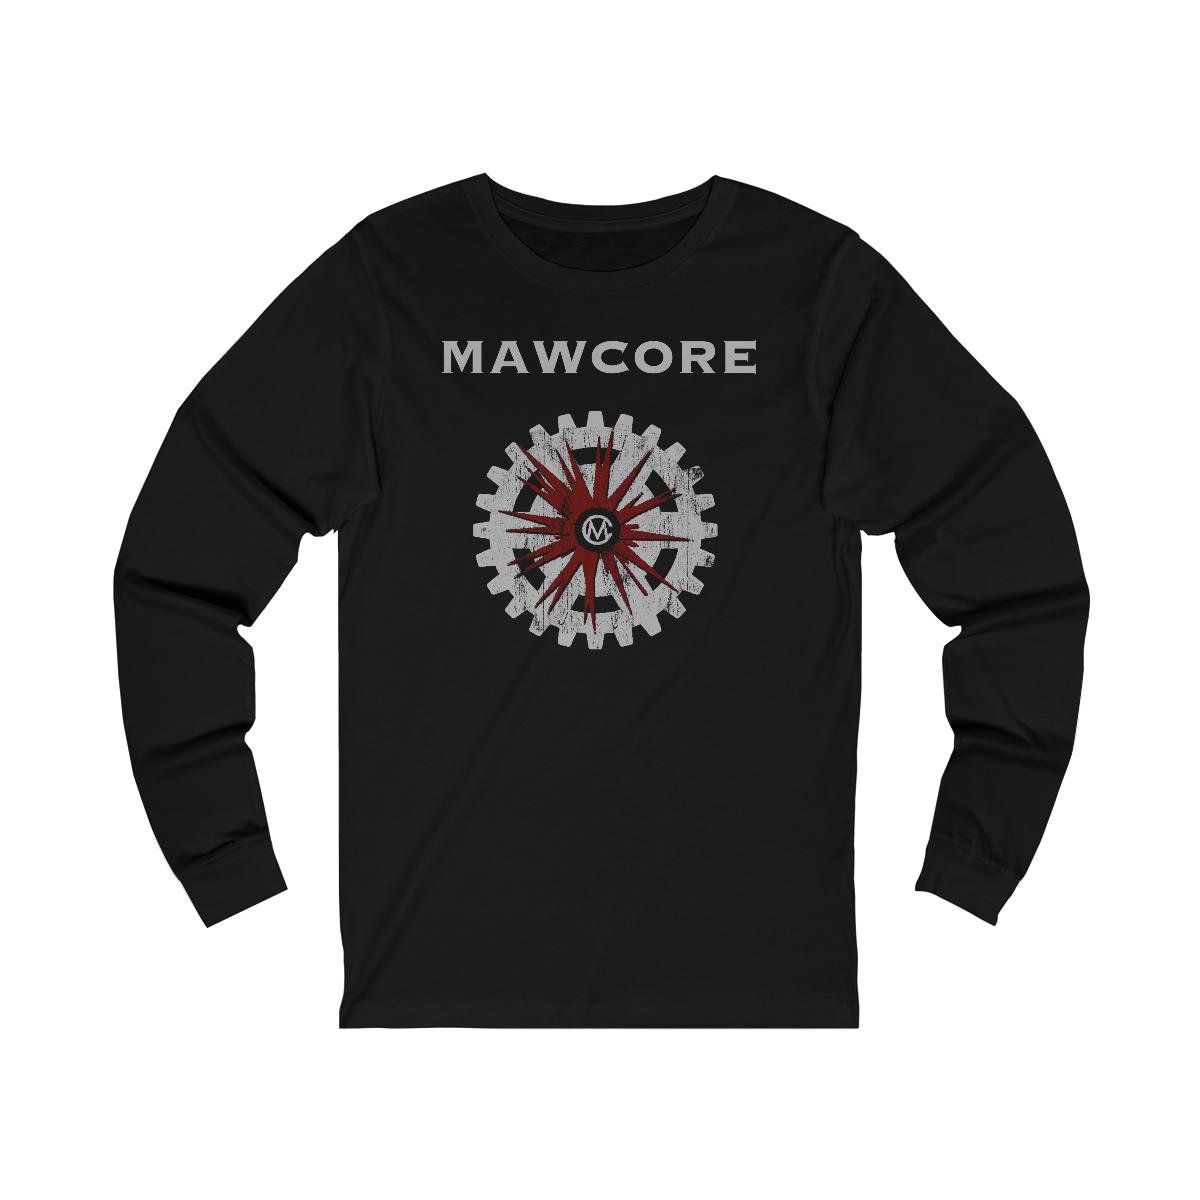 Mawcore Gear Long Sleeve Tshirt